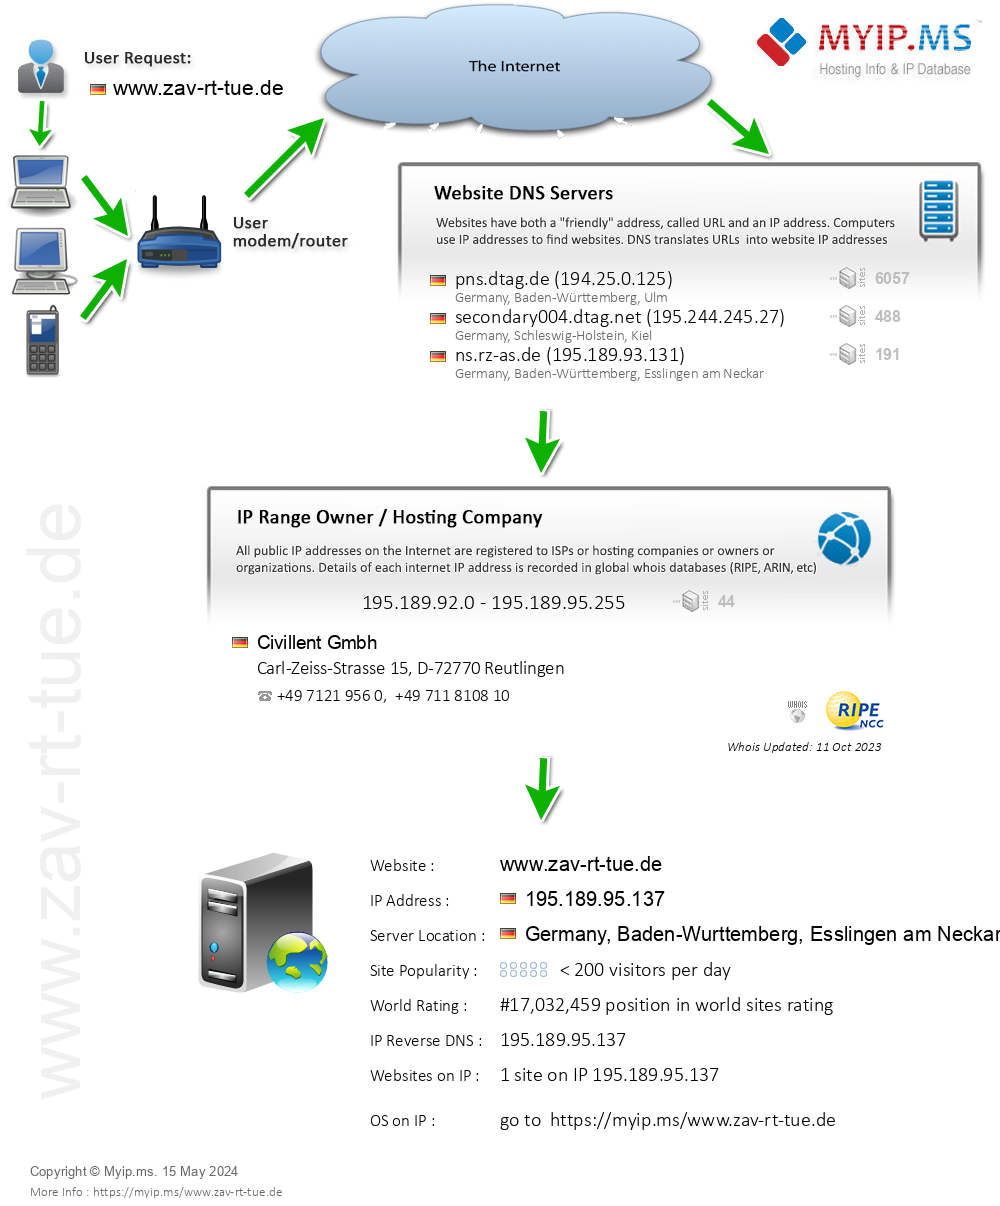 Zav-rt-tue.de - Website Hosting Visual IP Diagram